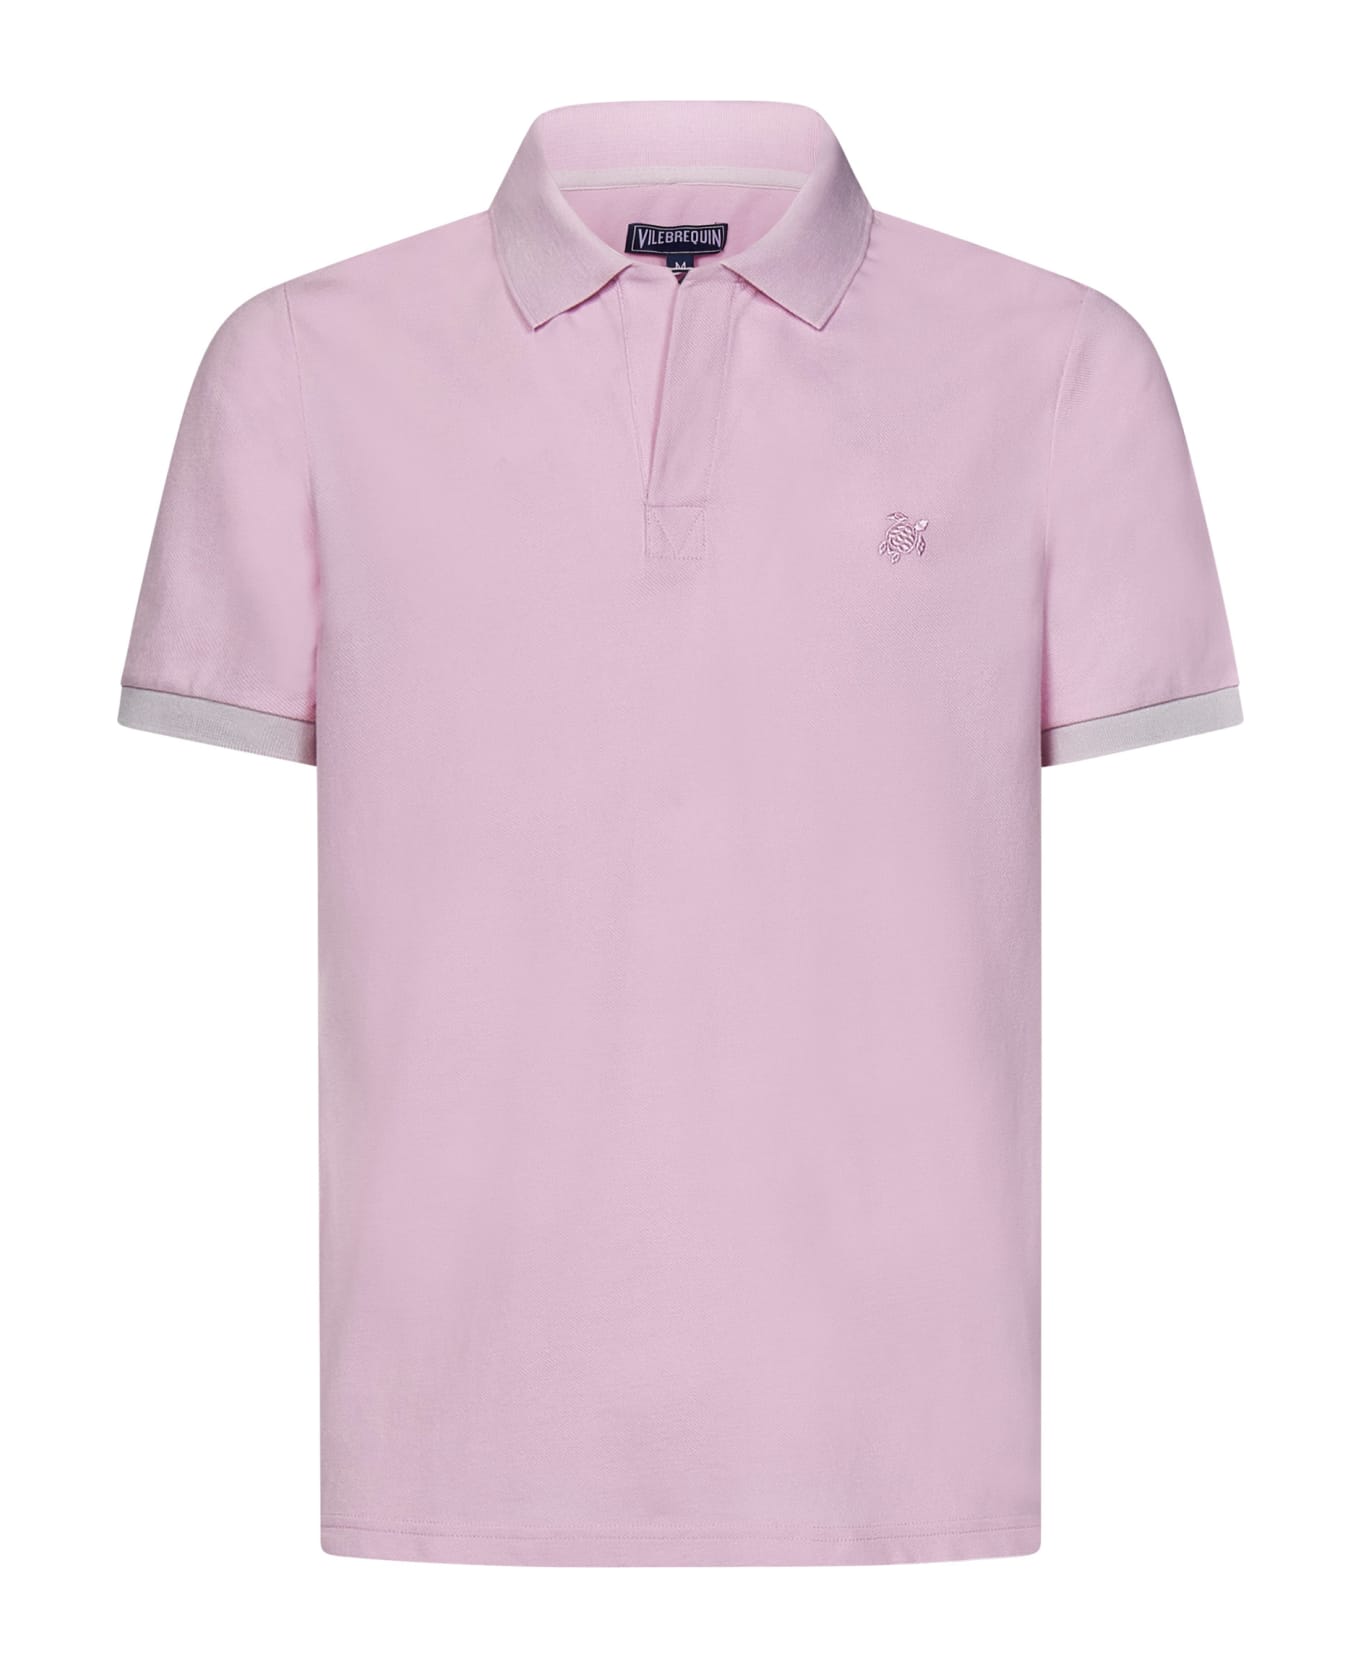 Vilebrequin Polo Shirt - Pink